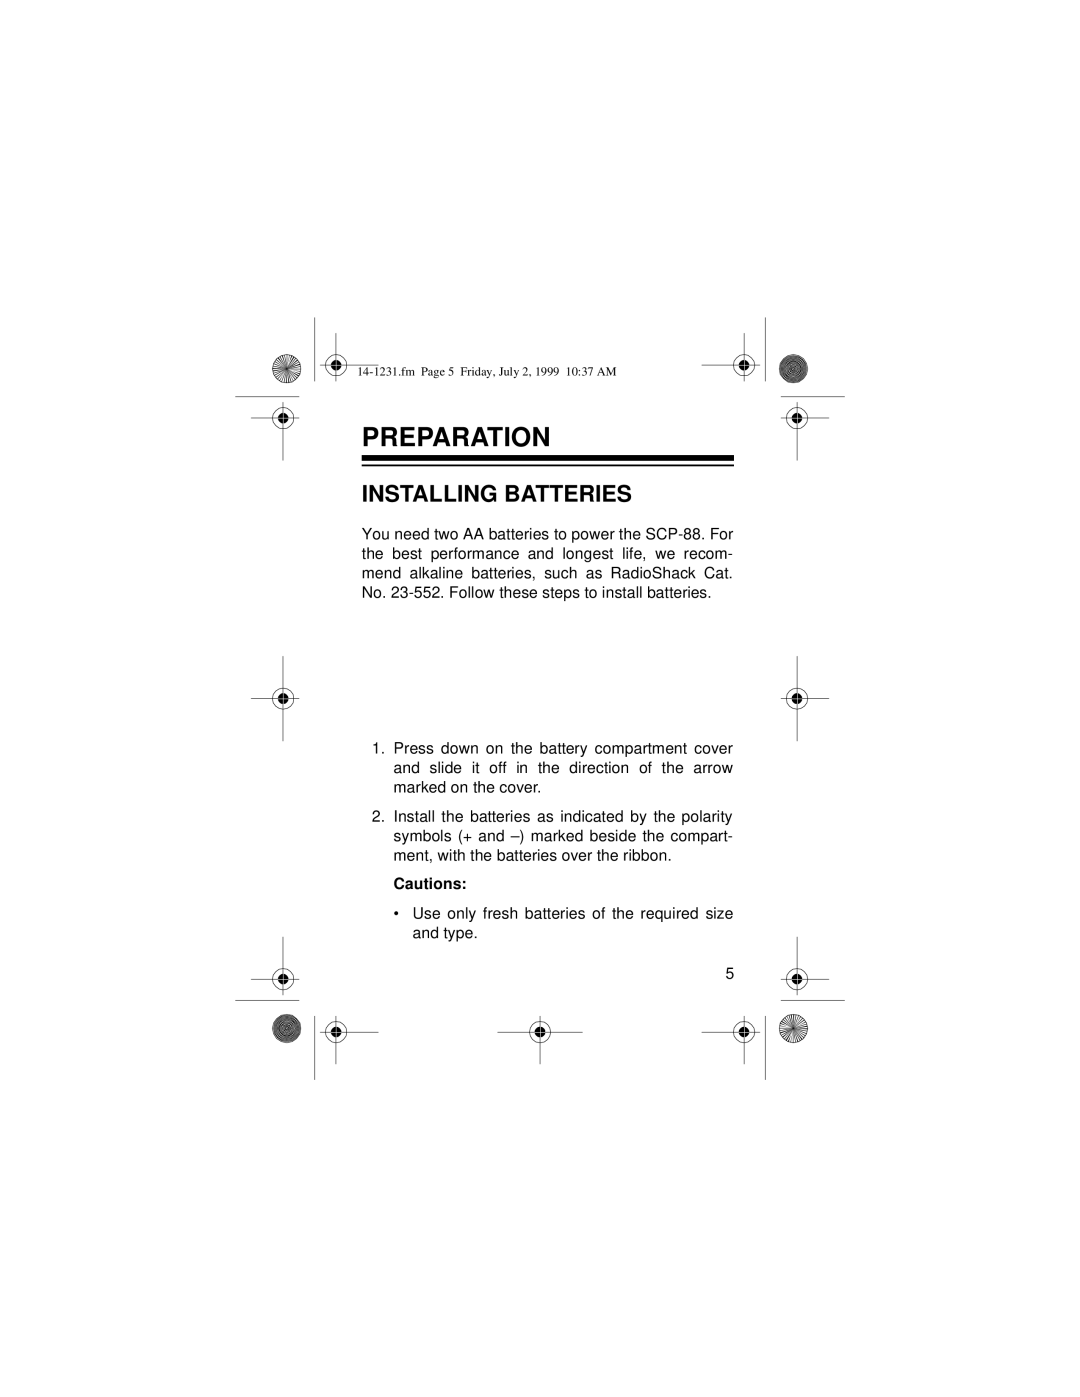 Optimus SCP-88 owner manual Preparation, Installing Batteries, Cautions 